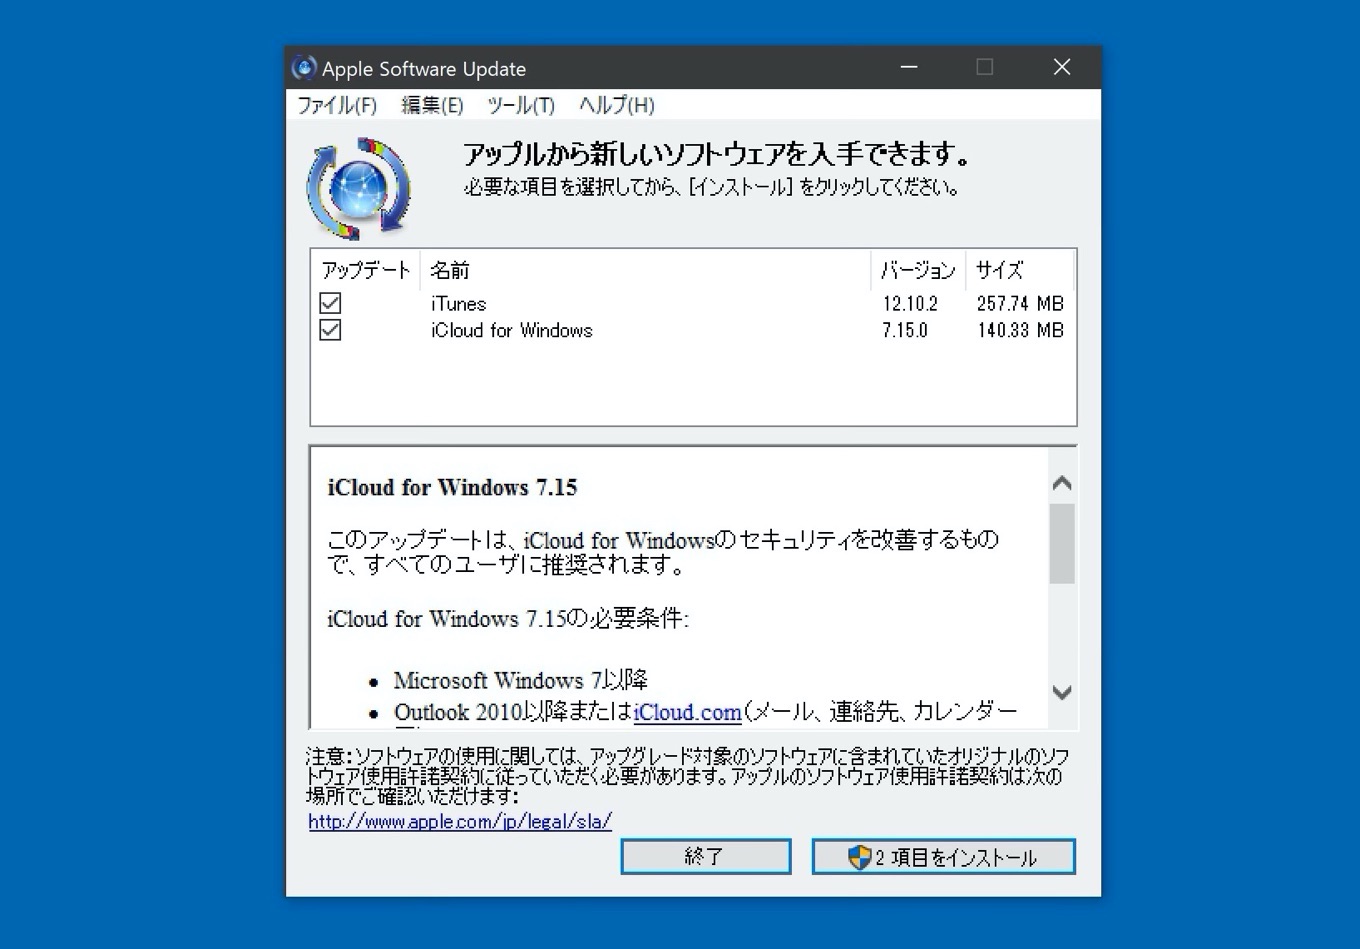 iCloud for Windows 7.15